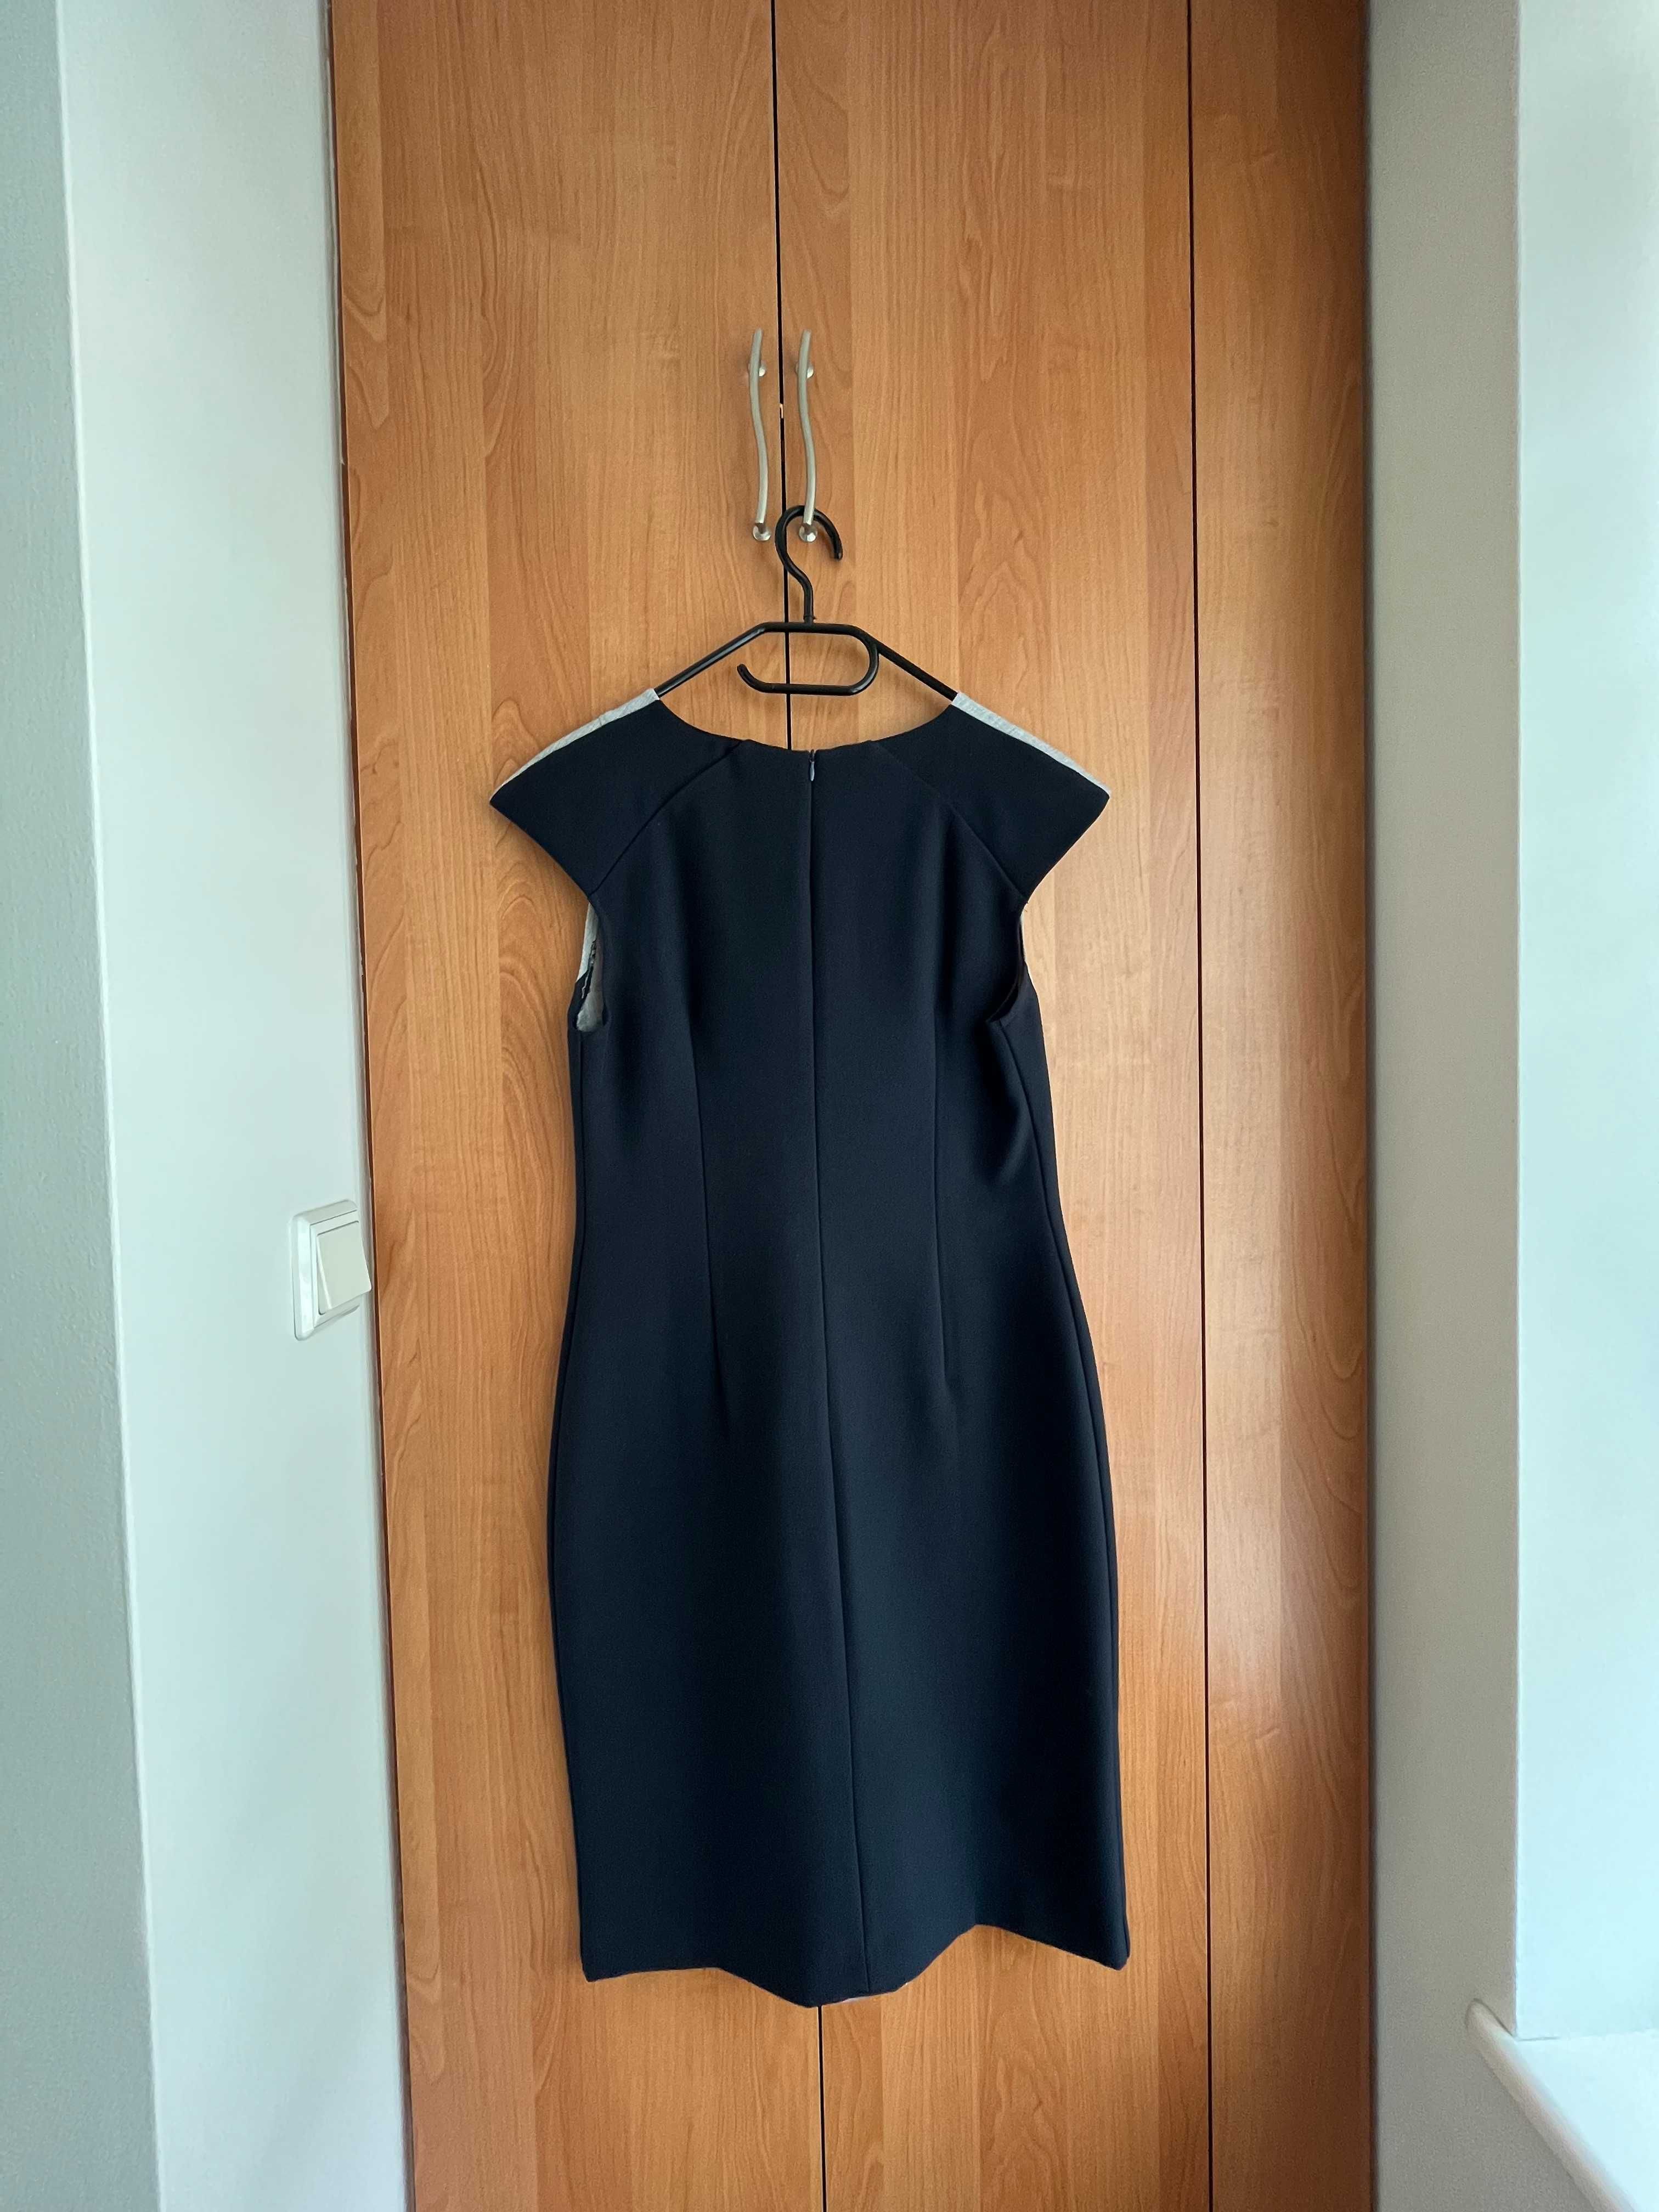 Sukienka suknia siwo-granatowa JAK NOWA Quiosque 38 M